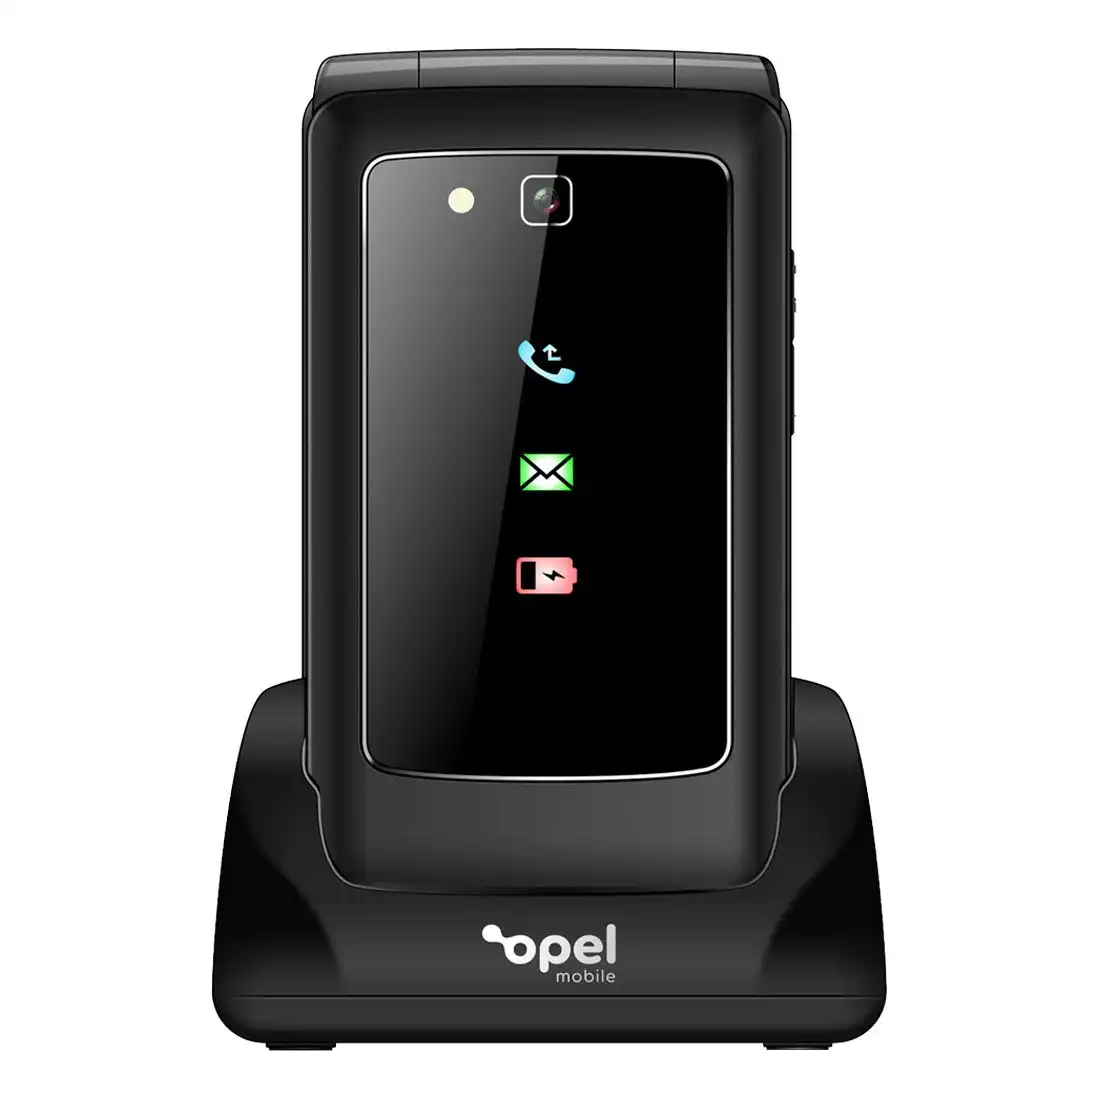 Opel Mobile Flip X 4G Flip Phone (Bonus $12 SIM Card, 2.8'', Keypad) - Black